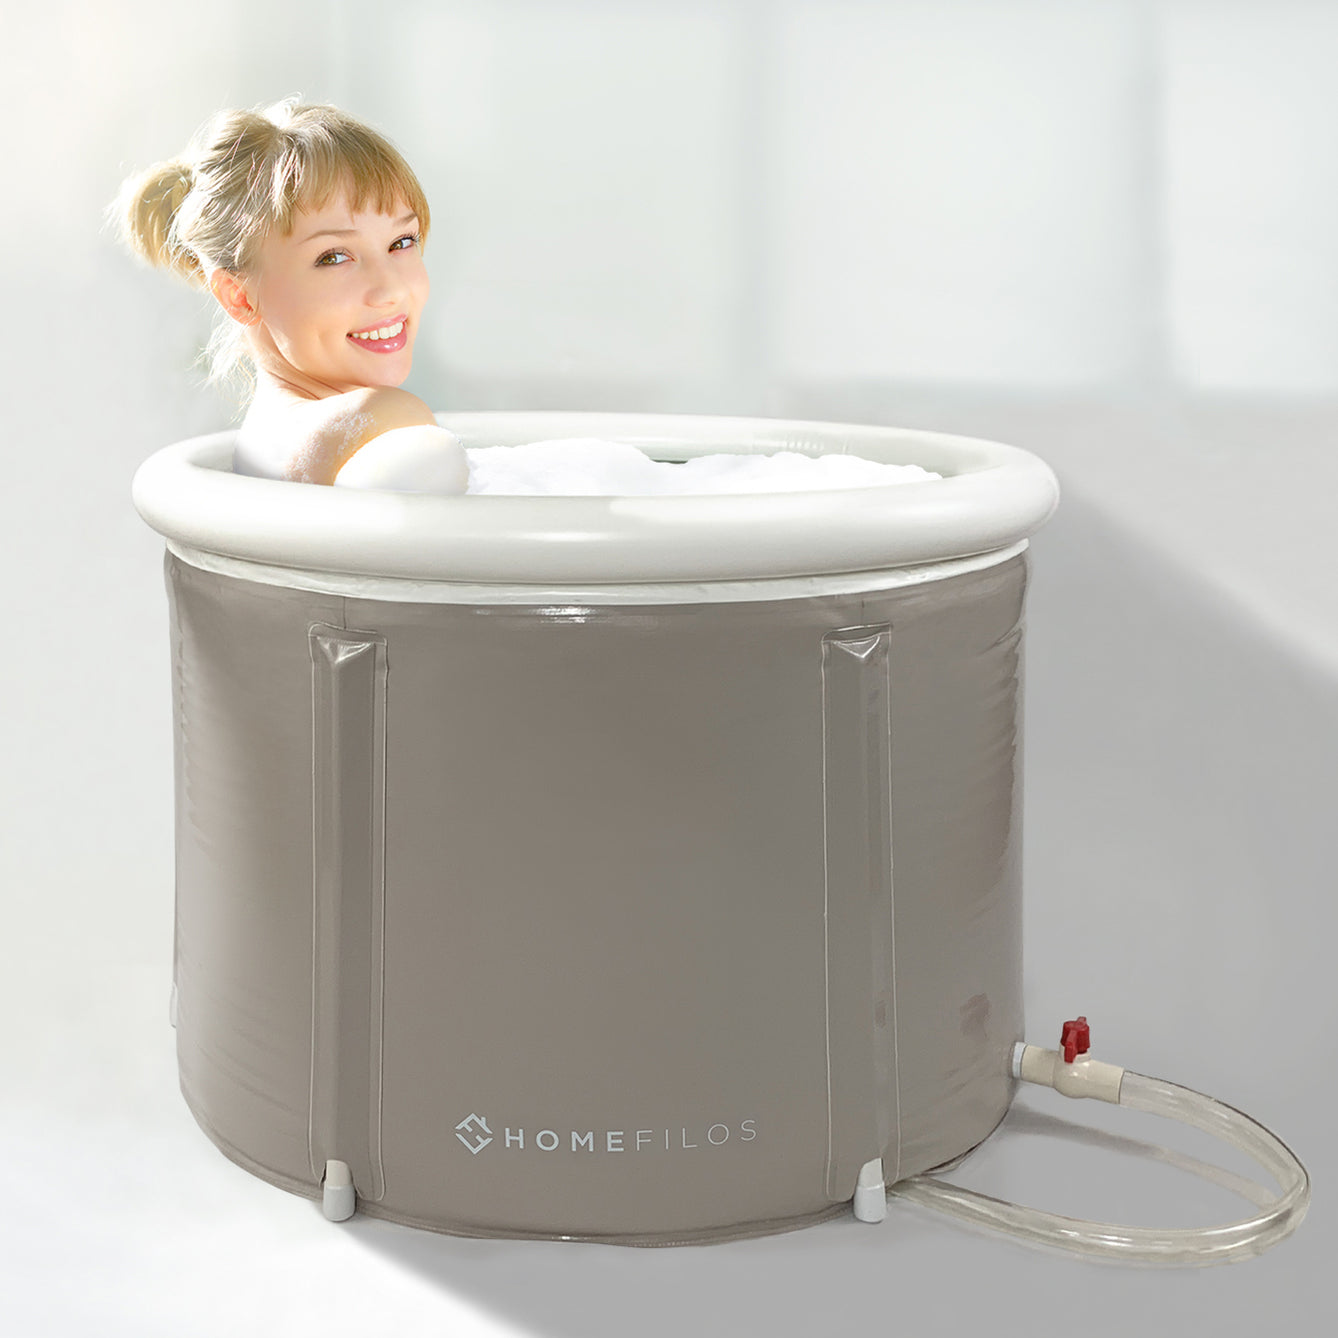 Portable Bathtub (SMALL) by Homefilos, Japanese Soaking Bath Tub for S